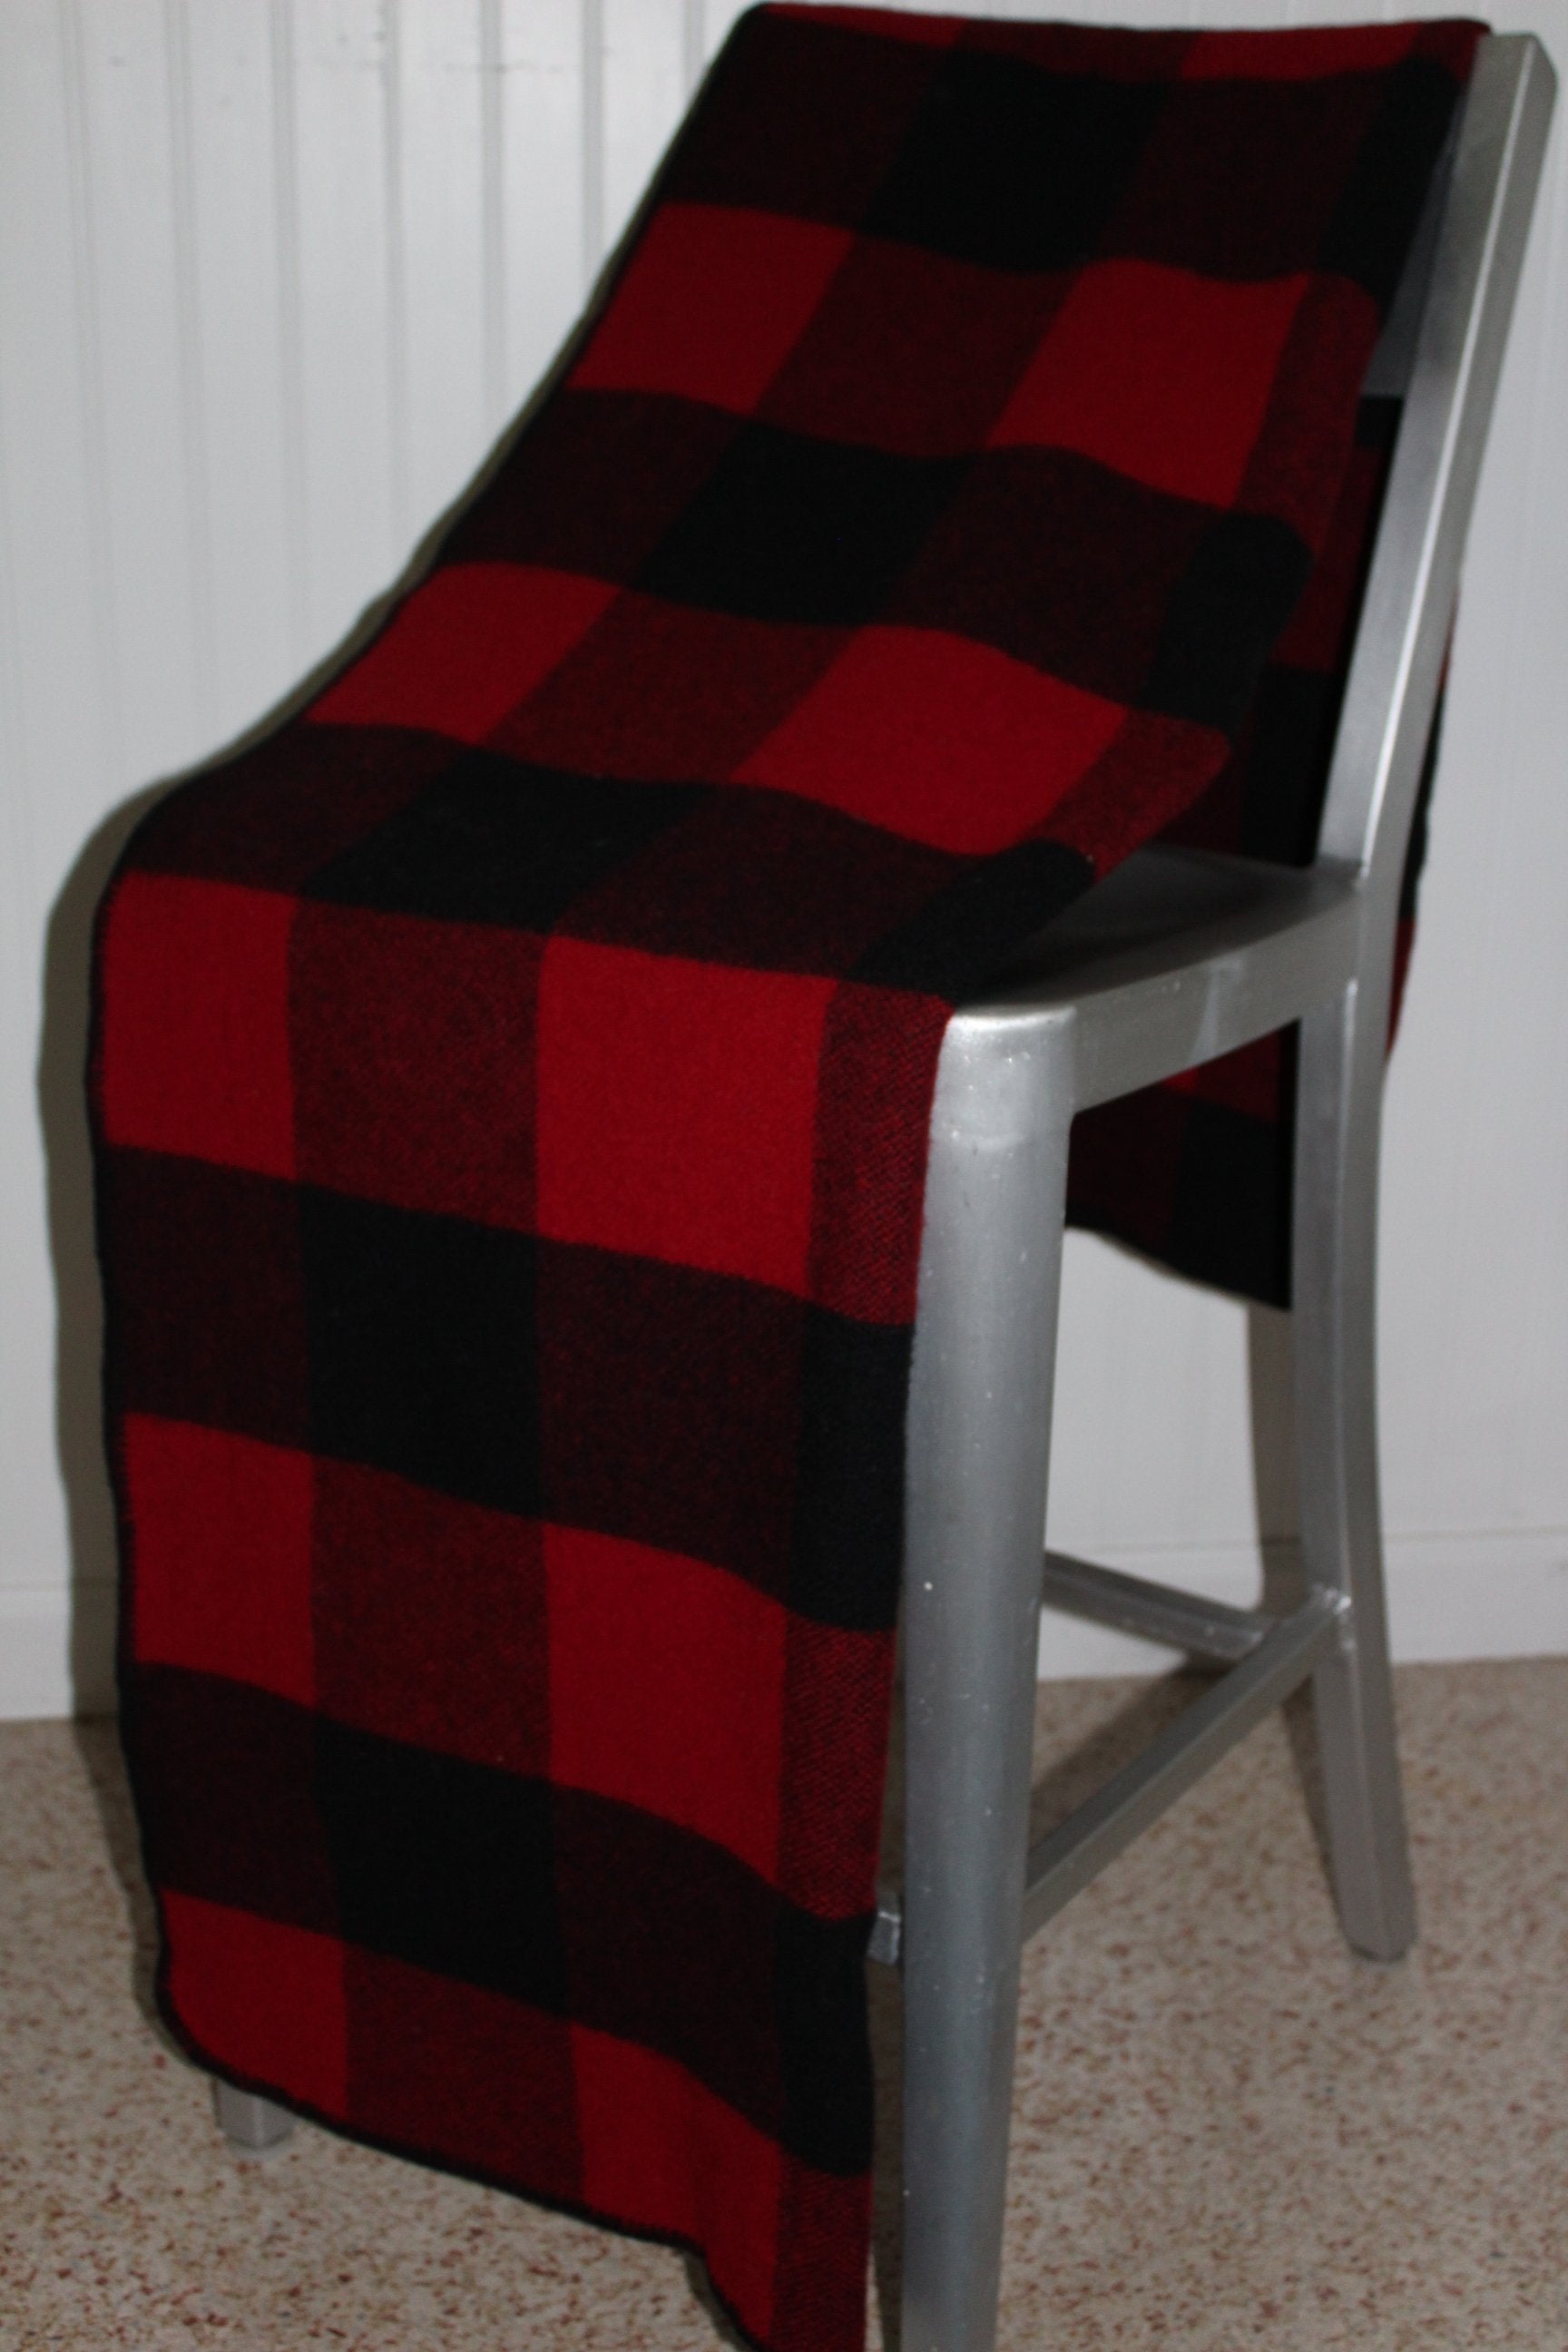 Marlboro Blanket Buffalo Plaid  58" X 70" Black Red Wool Nylon Blend USA dense